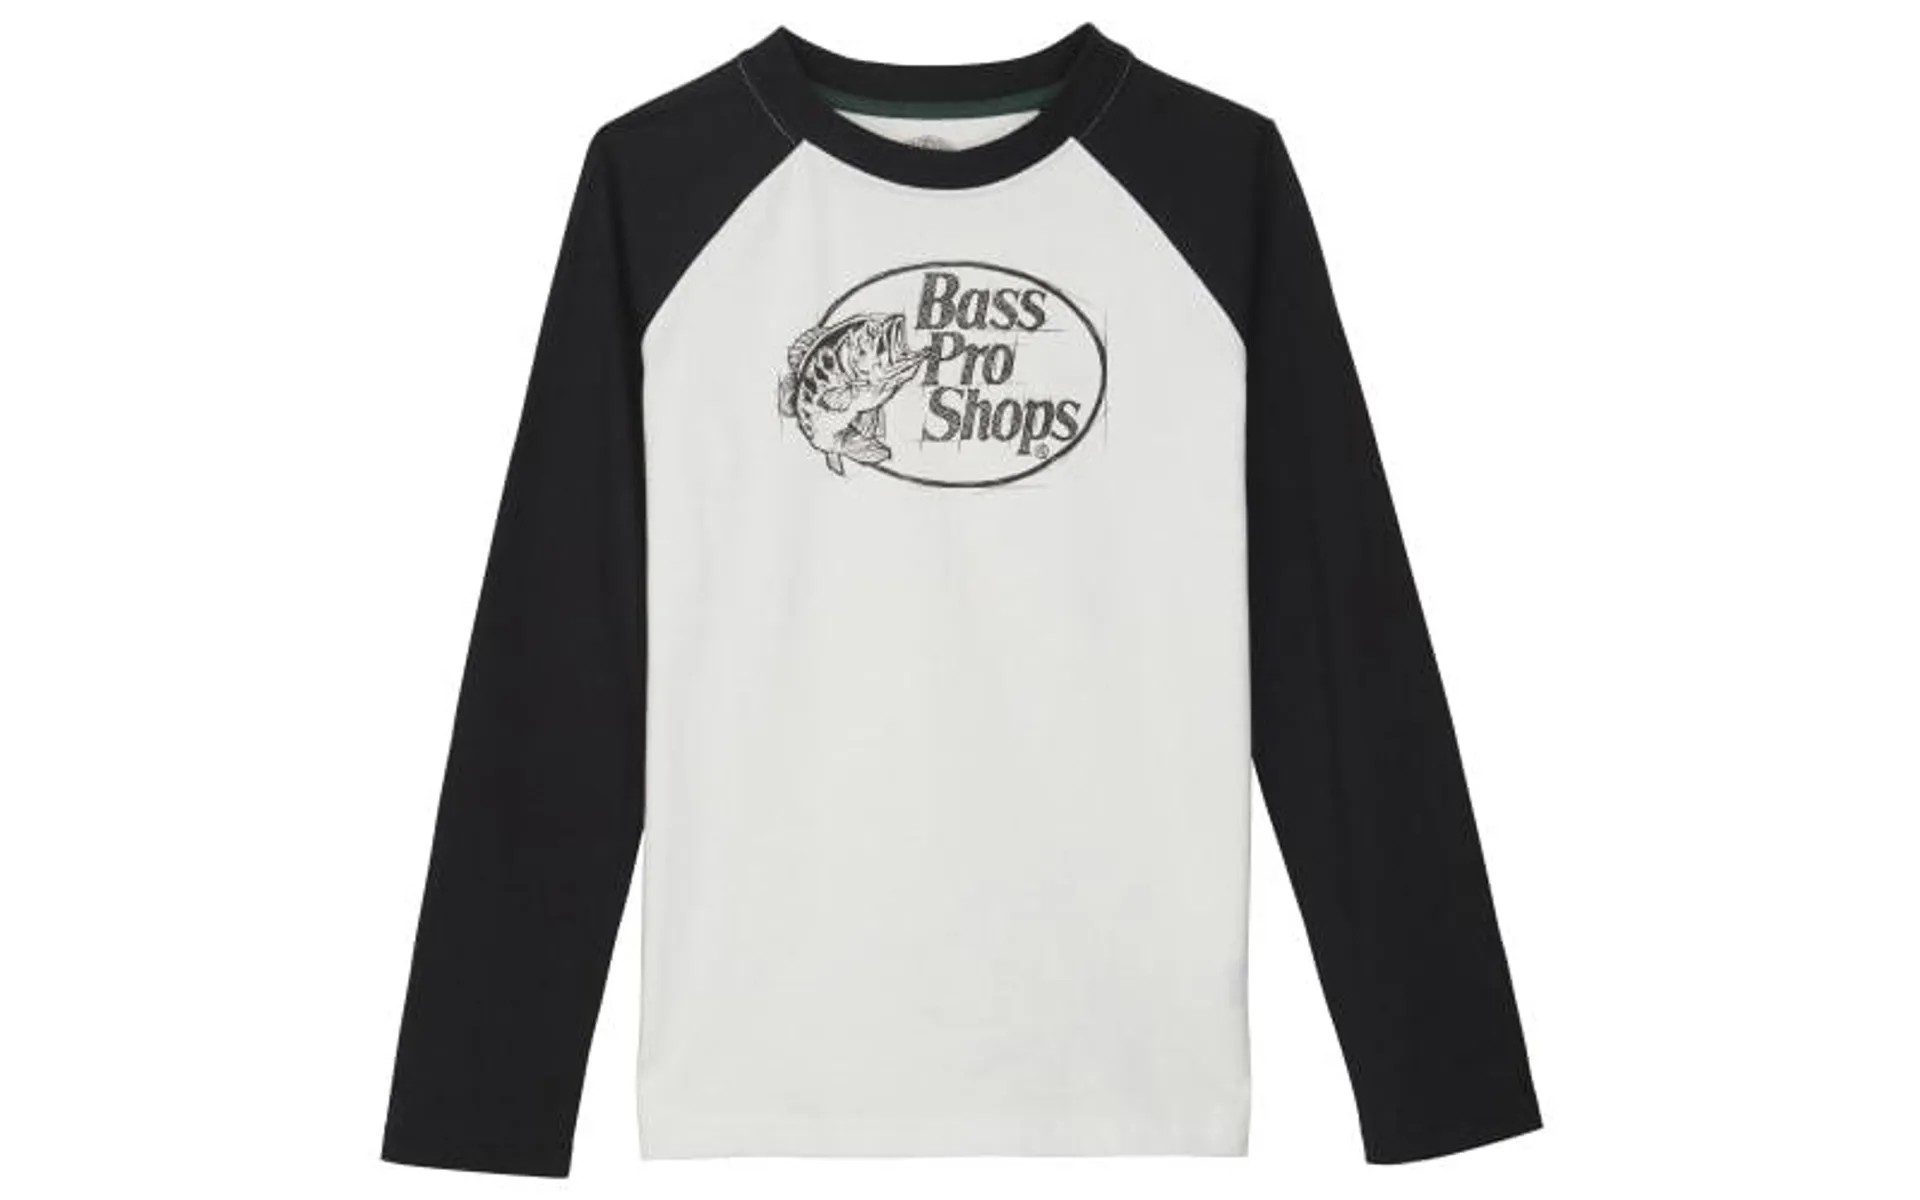 Bass Pro Shops Raglan Logo Long-Sleeve T-Shirt for Toddlers or Kids